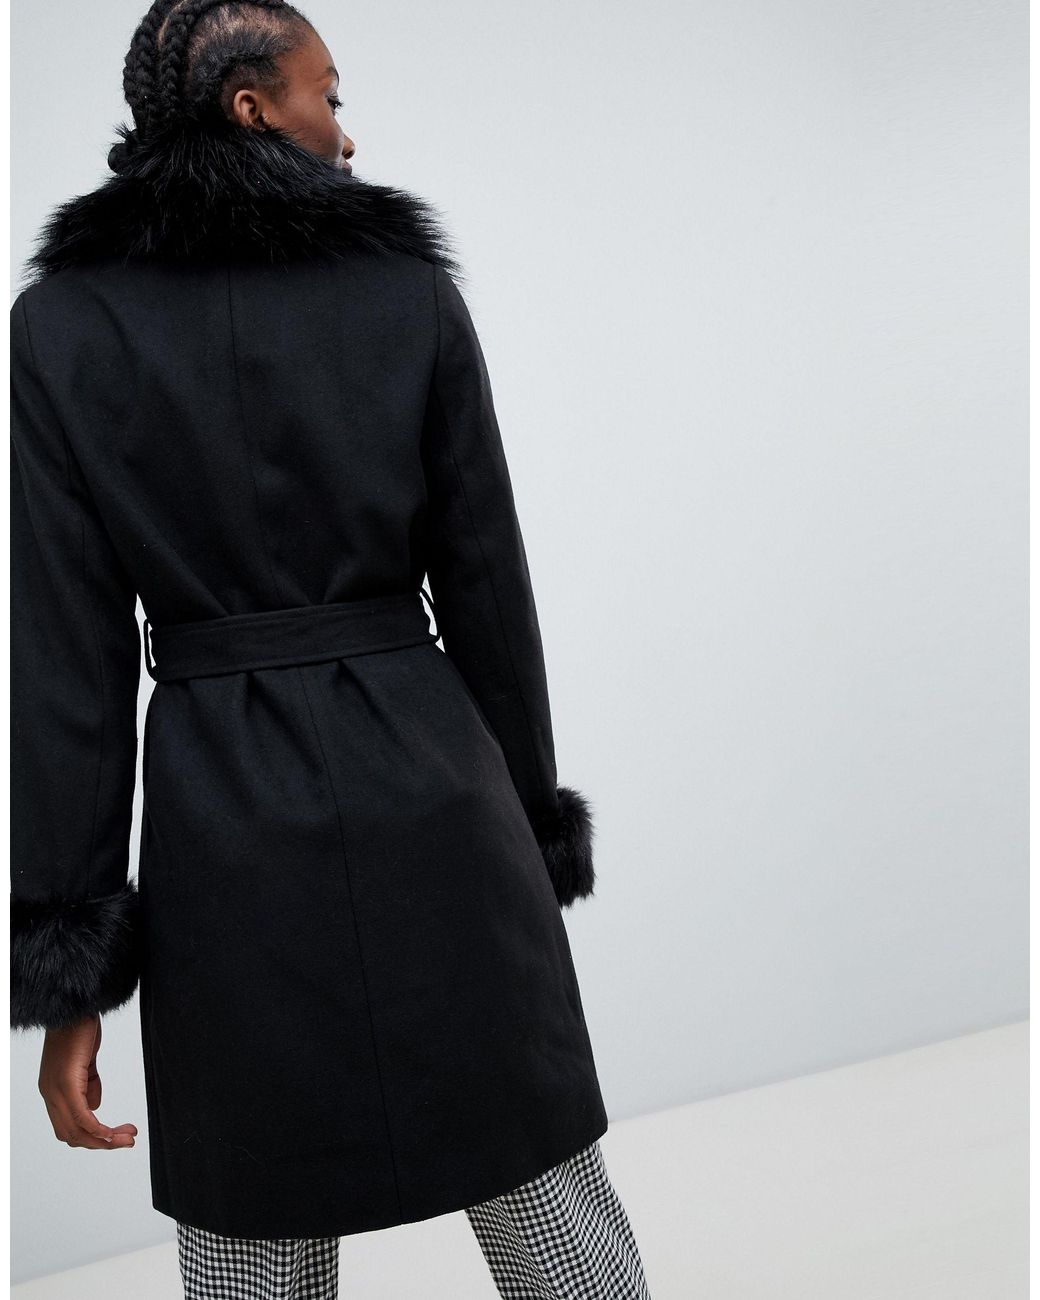 New Look Faux Fur Trim Coat in Black | Lyst